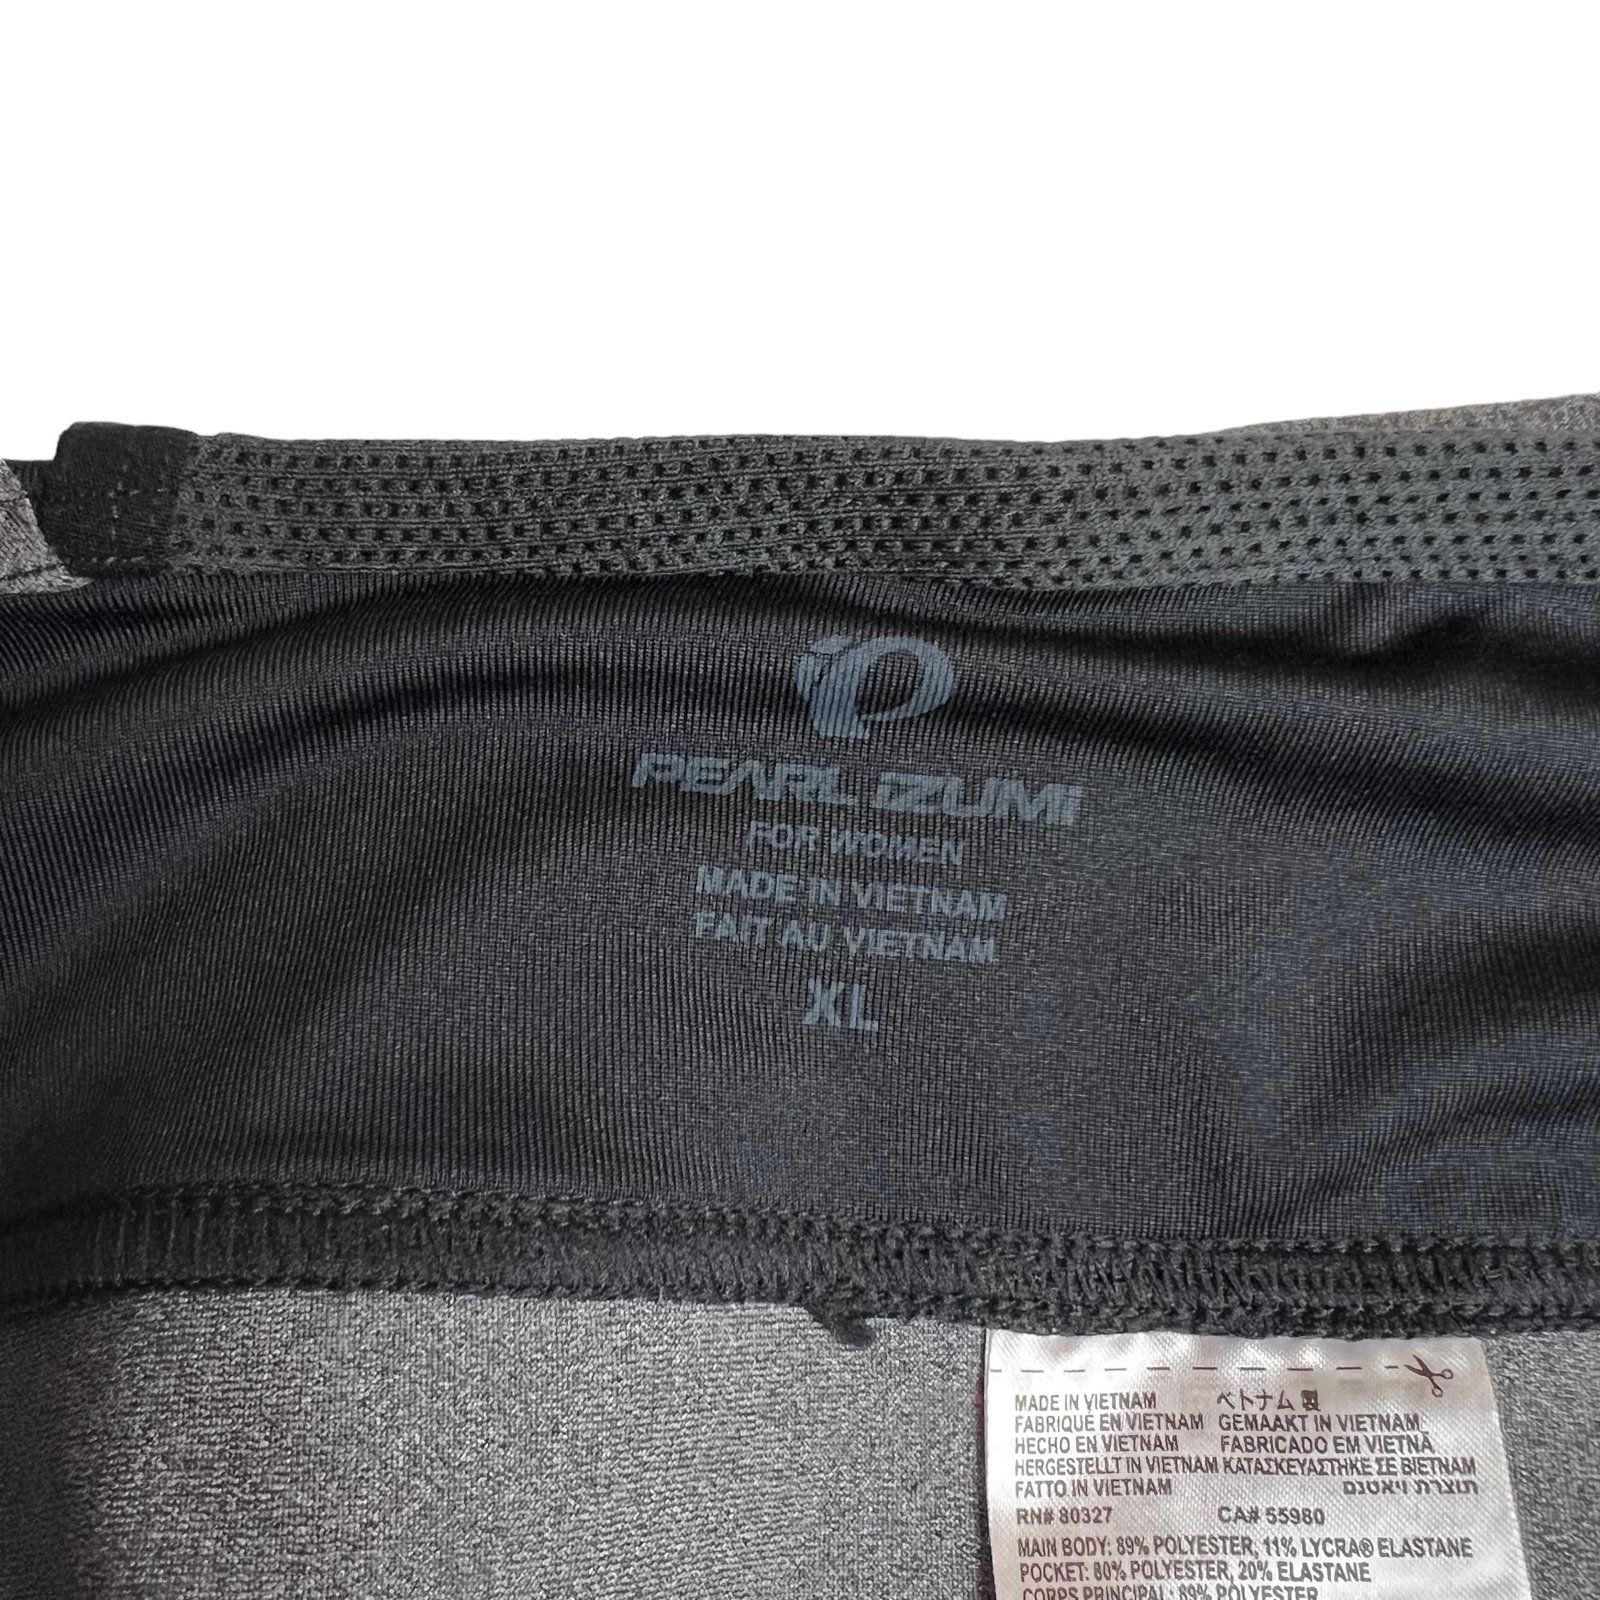 Popular Pearl Izumi Bike cycling Skirt Size:  XLarge Grey Black Stretch Wrap (No Liner) O0tVz4vY8 well sale